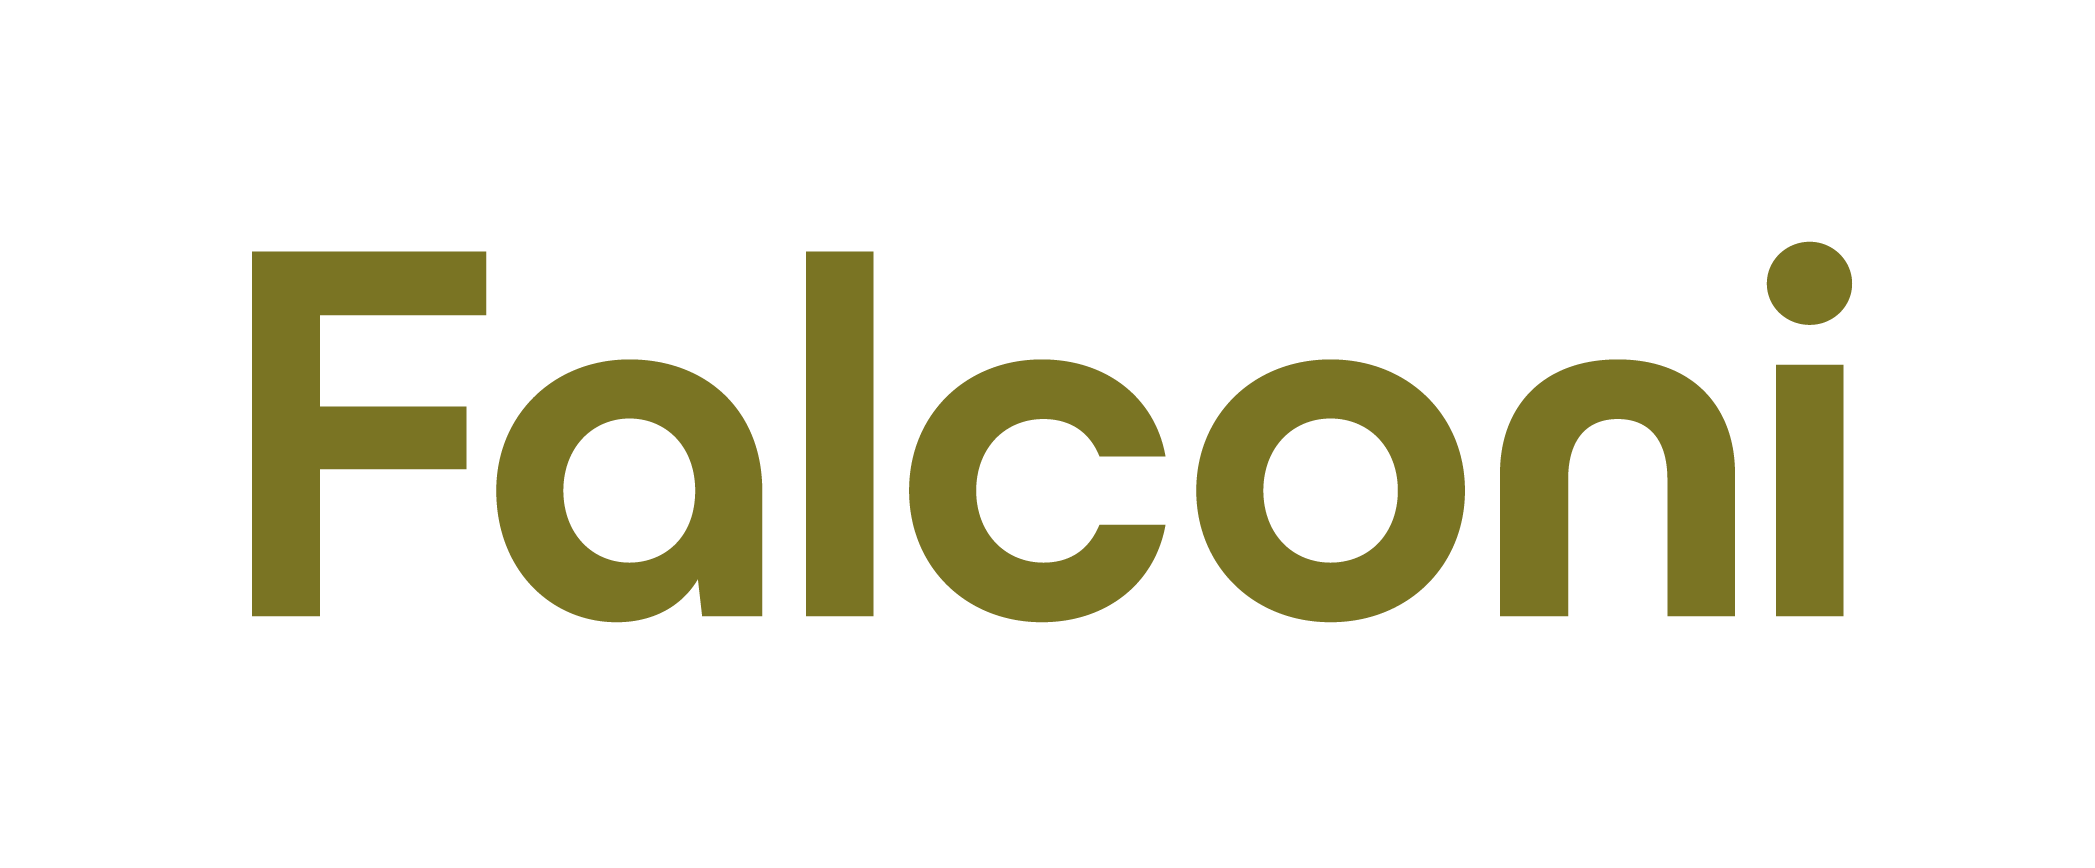 falconi logo.png